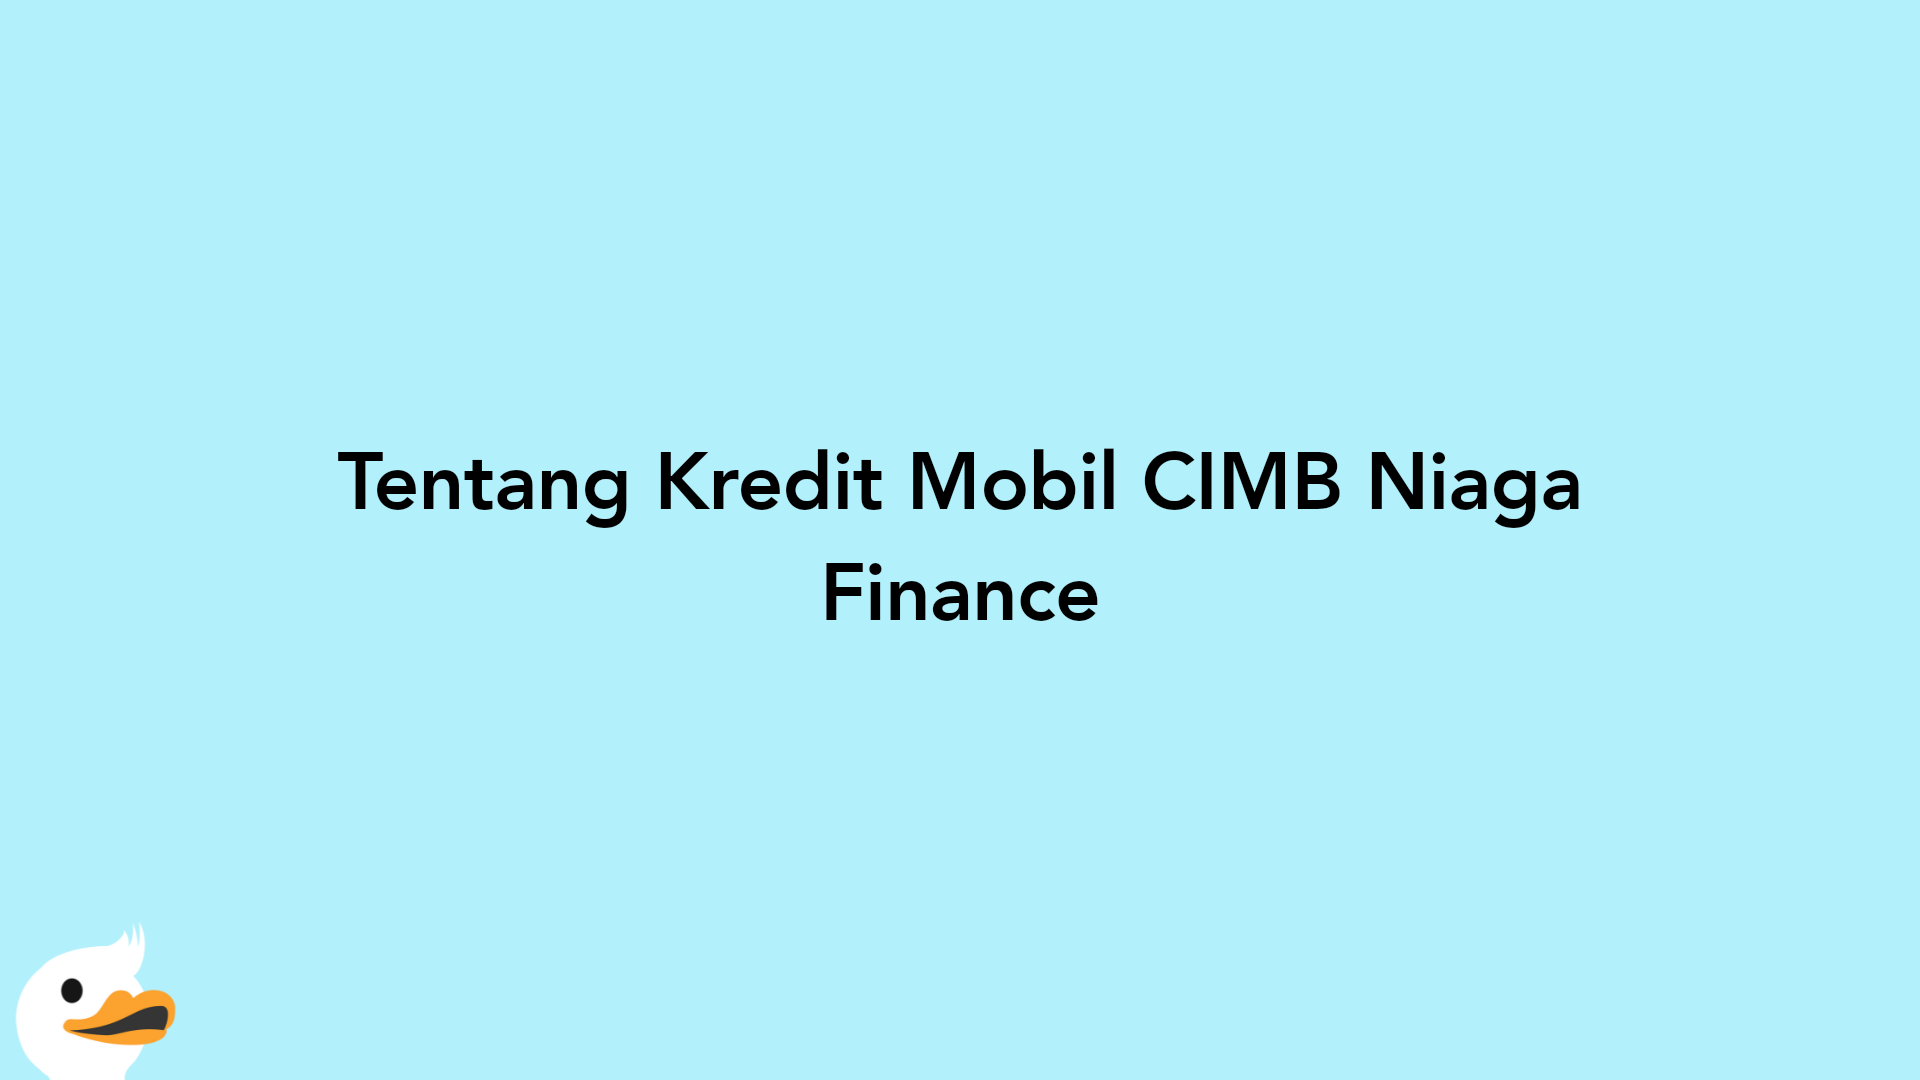 Tentang Kredit Mobil CIMB Niaga Finance